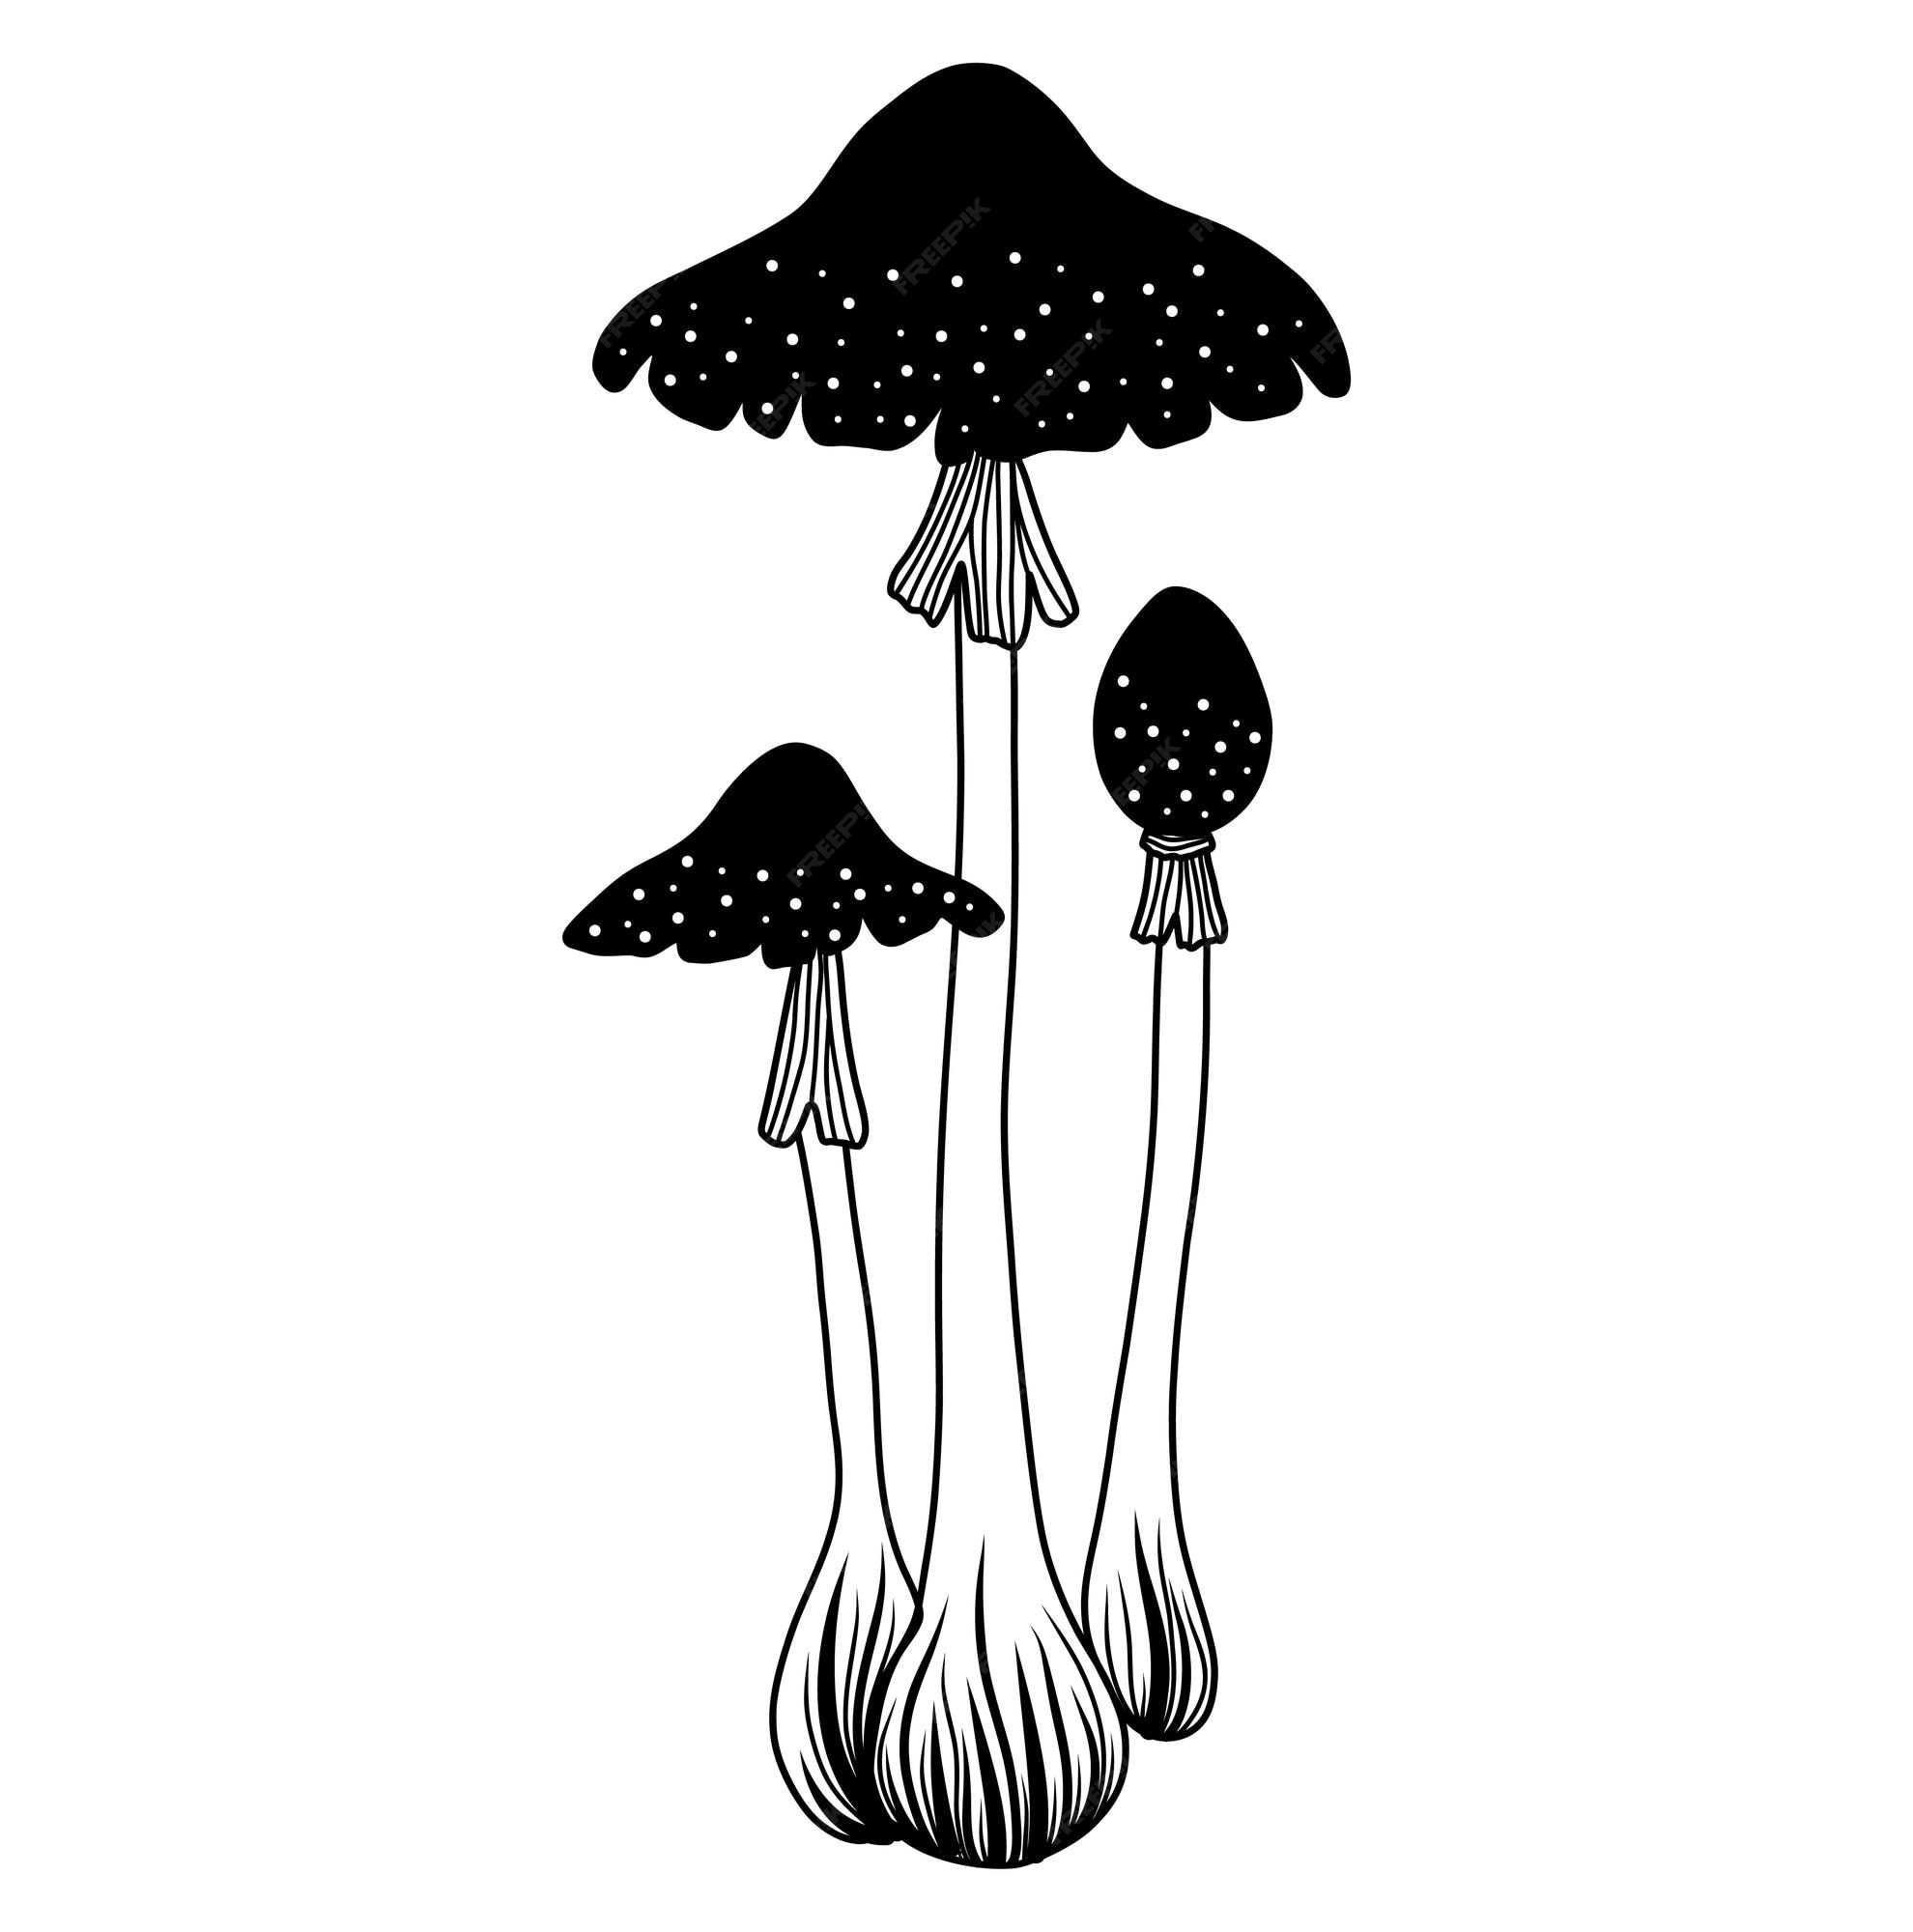 Desenho vetorial de cogumelos de boleto imagem vetorial de artelka_lucky©  407688110